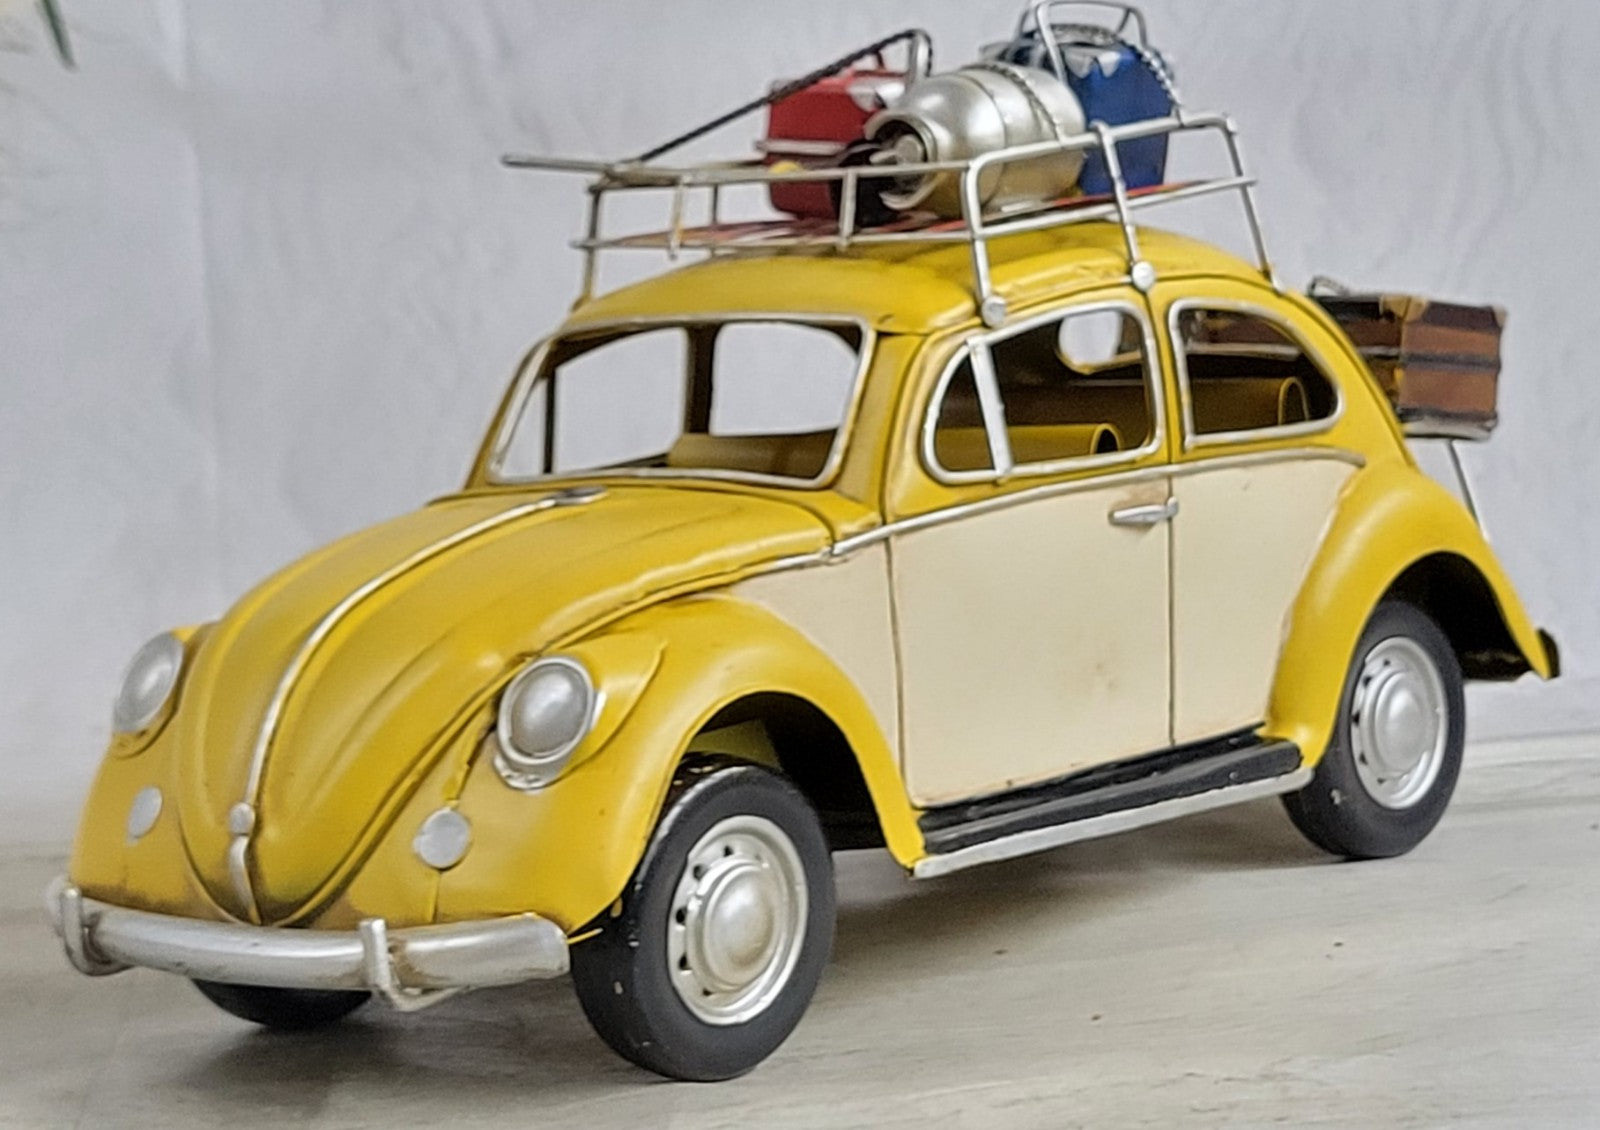 Vintage handmade iron art roof rack for luggage frame decoration beetle model